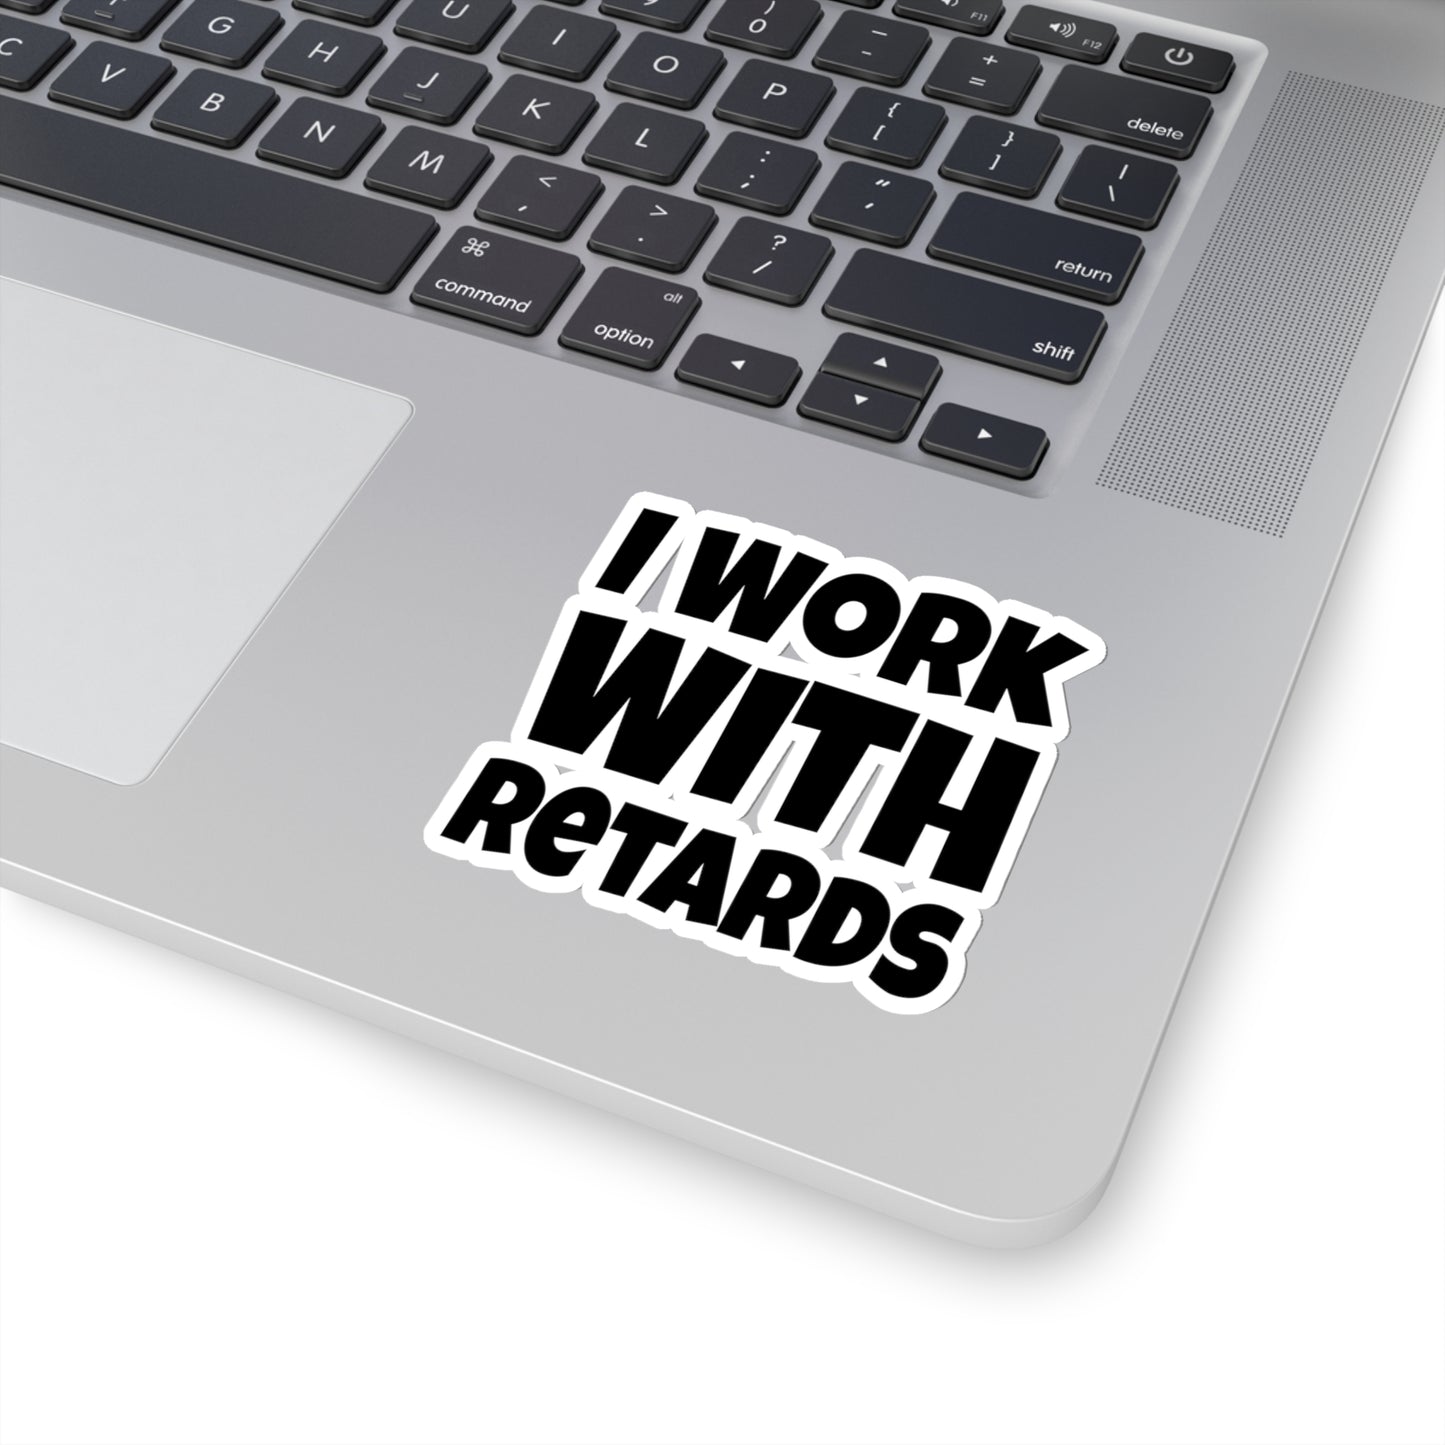 I Work with Retards - Kiss-Cut Stickers